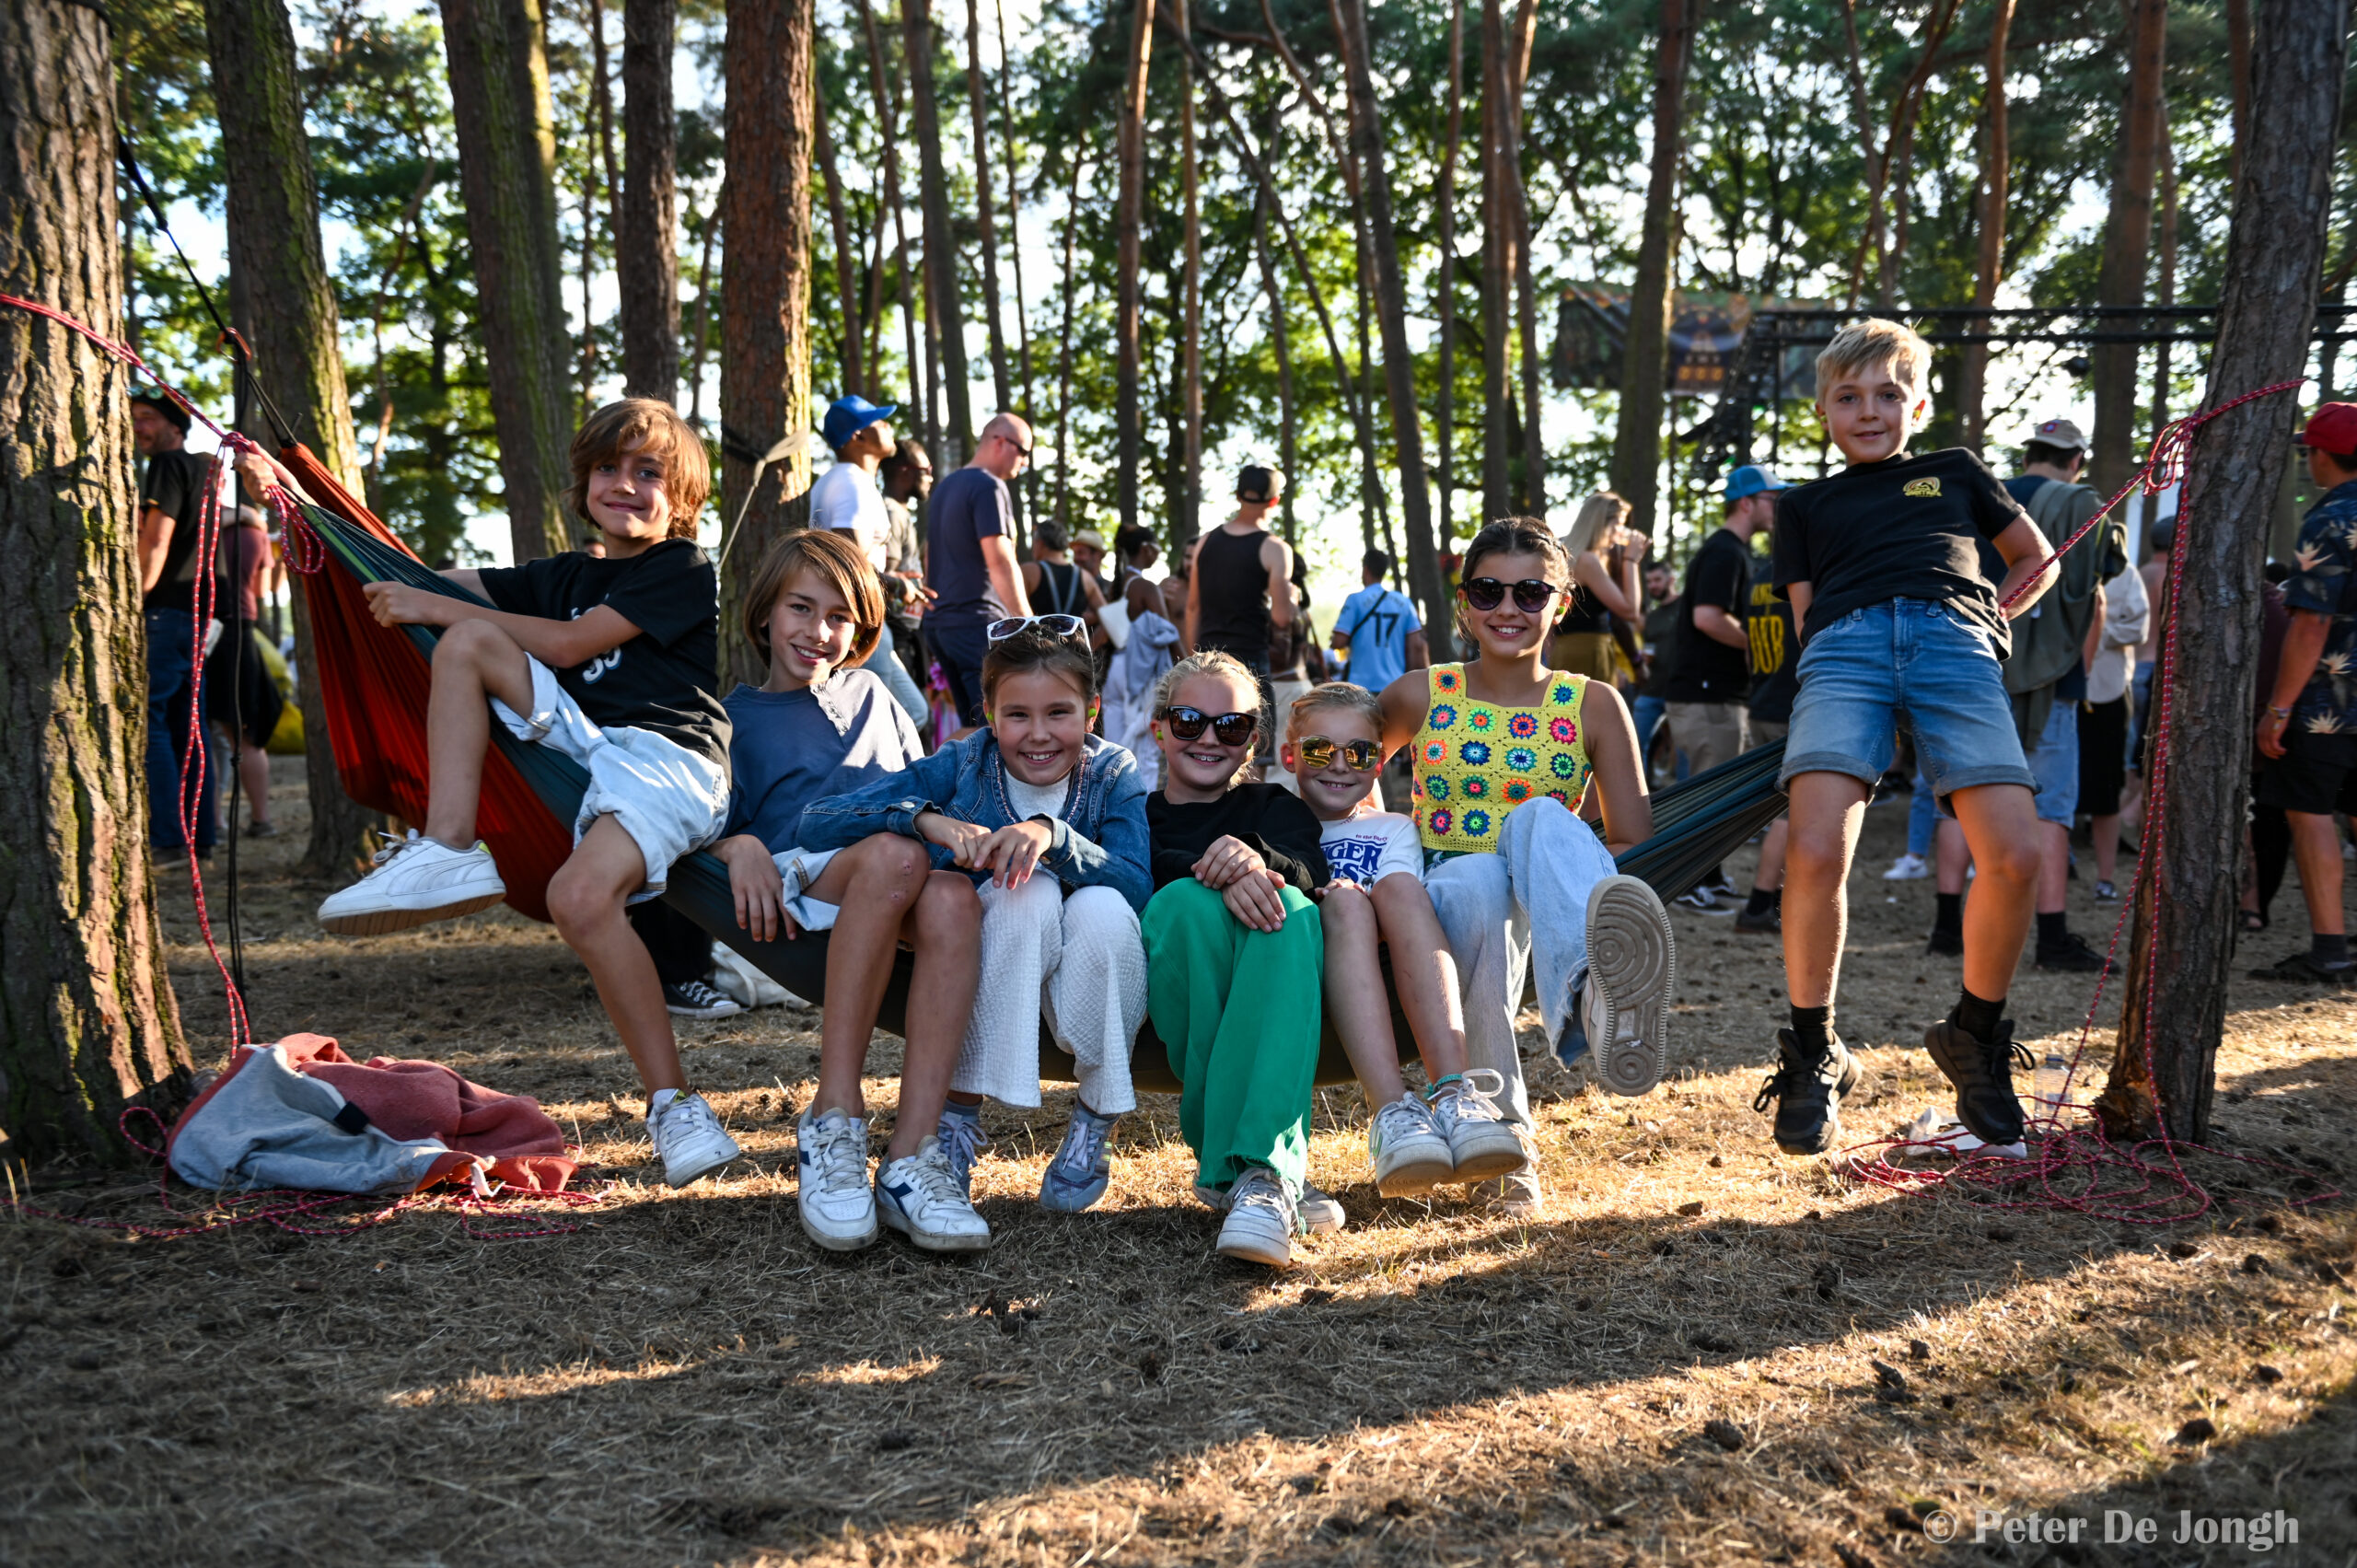 A Kids-safe festival experience